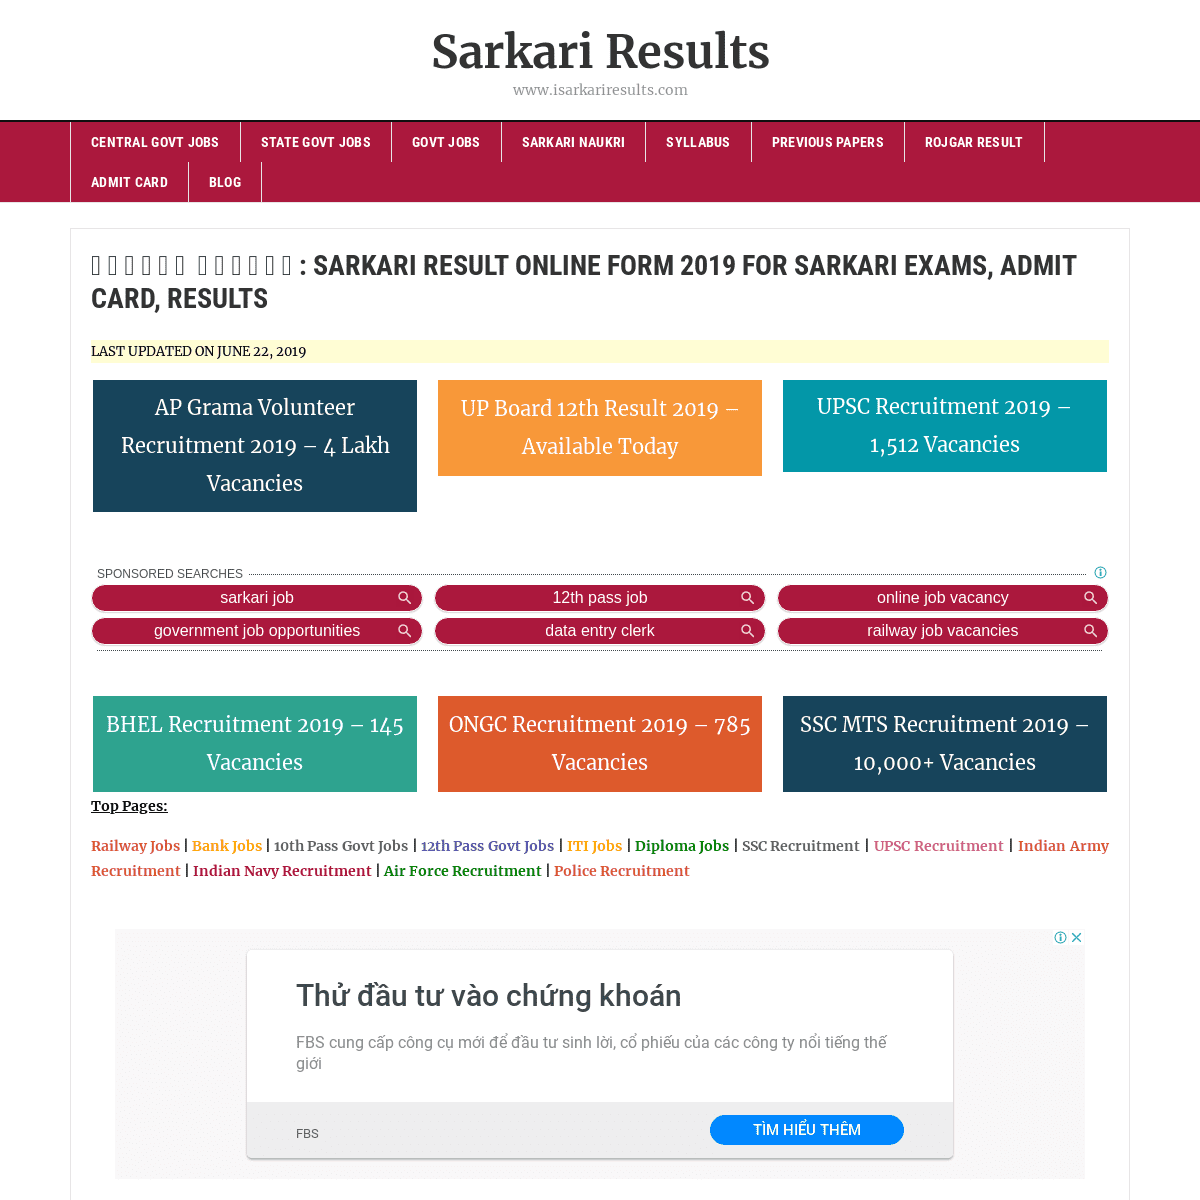 Sarkari Result: Online Form, Sarkari Exam, Admit card, Sarkari Results